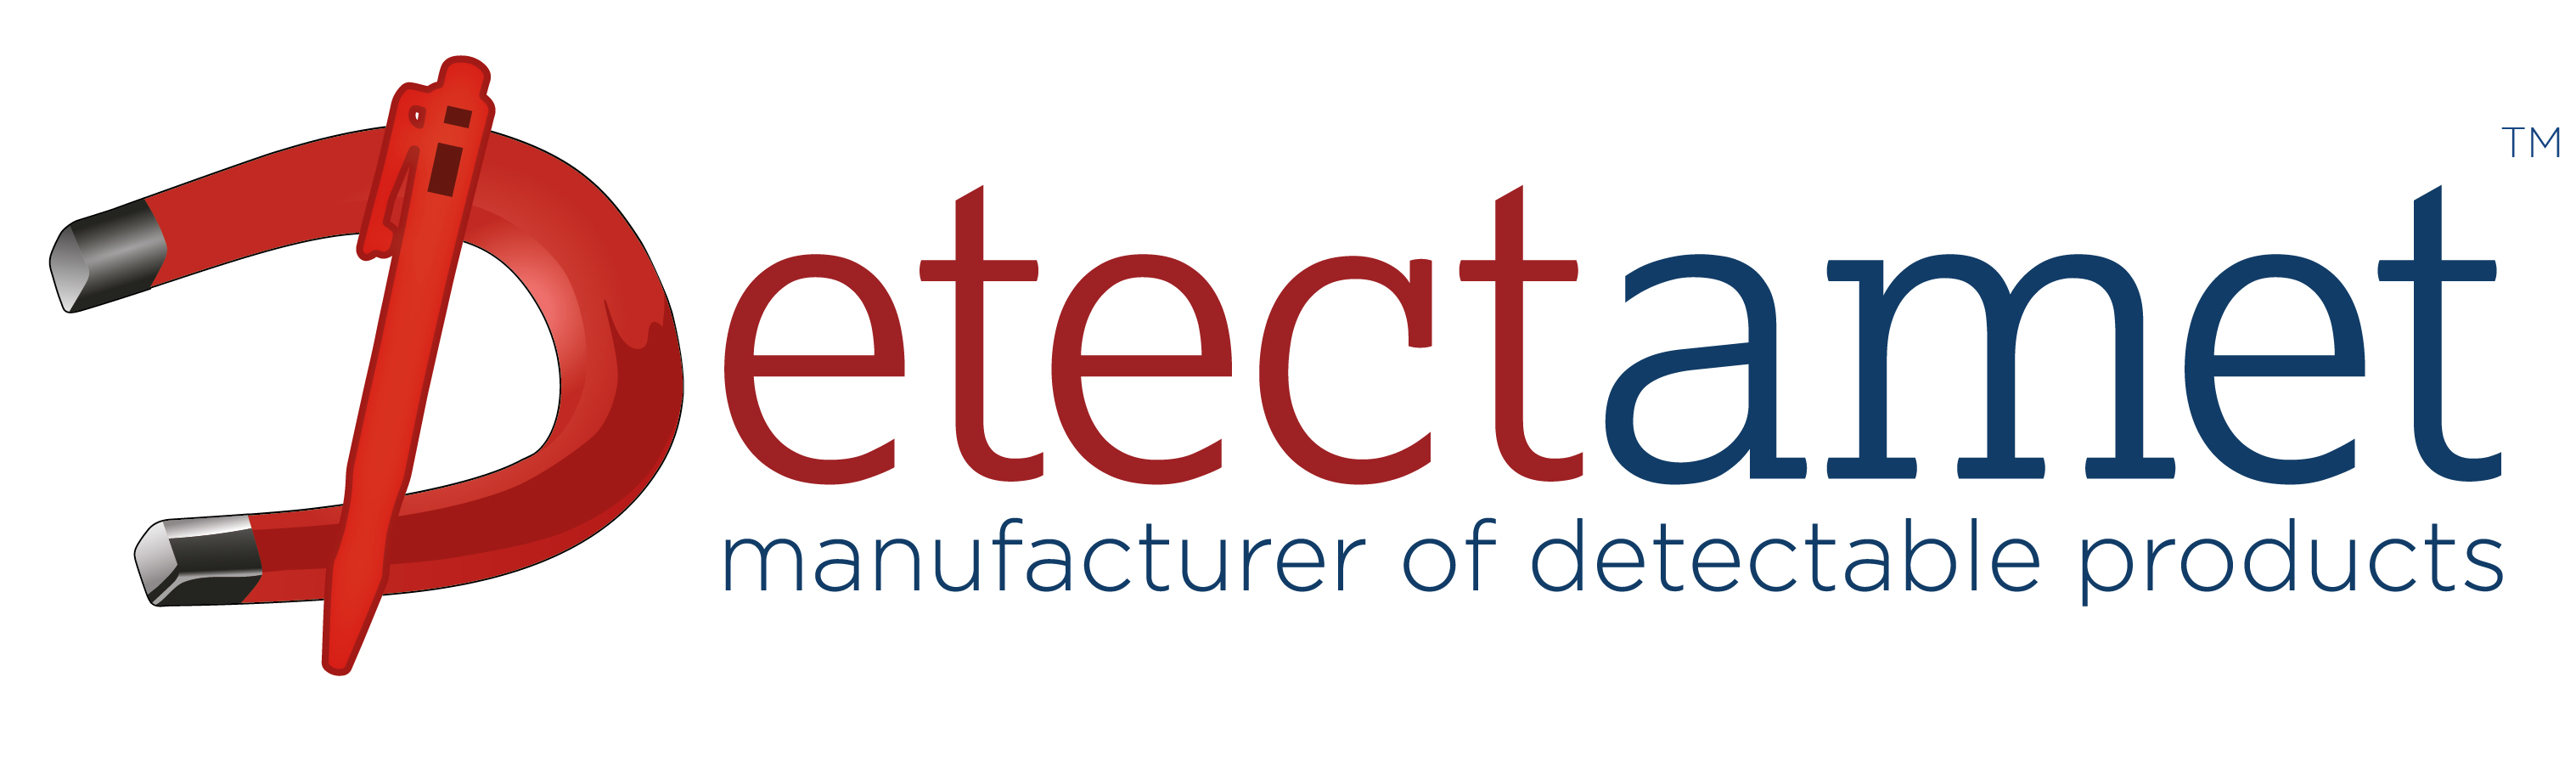 Red Detectamet TM manufacturer of detectable products Logo